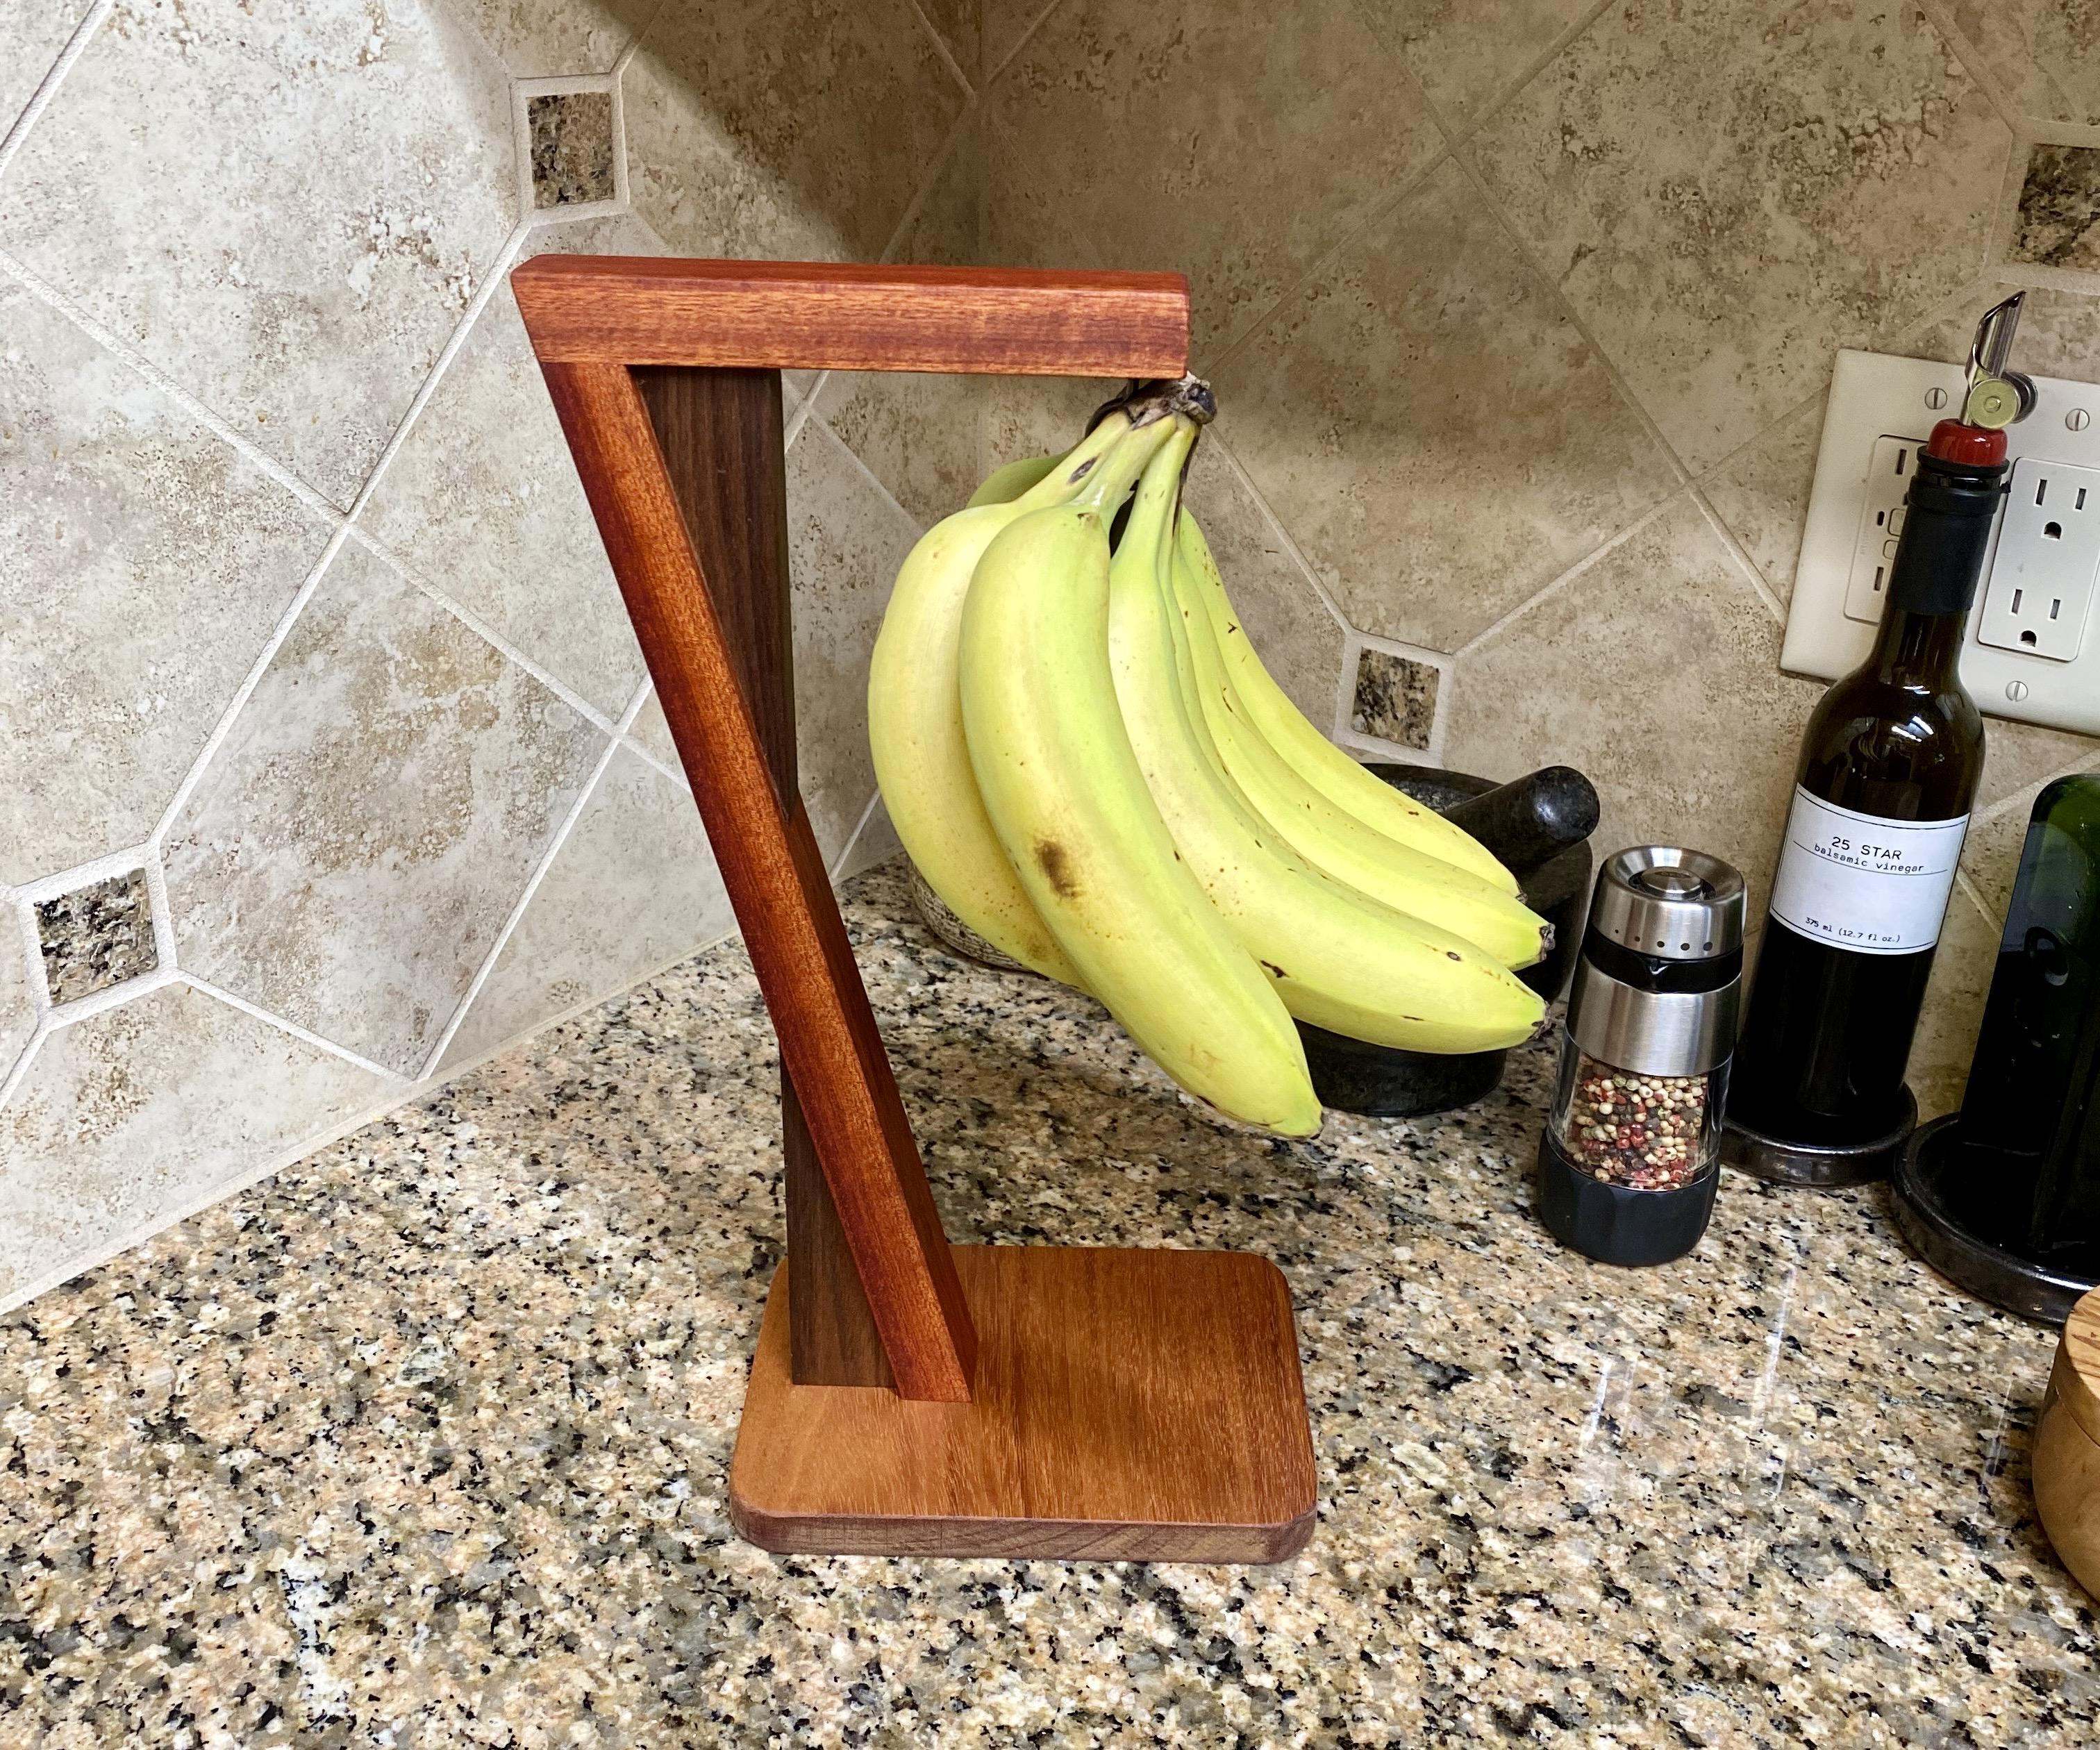 A Banana Holder